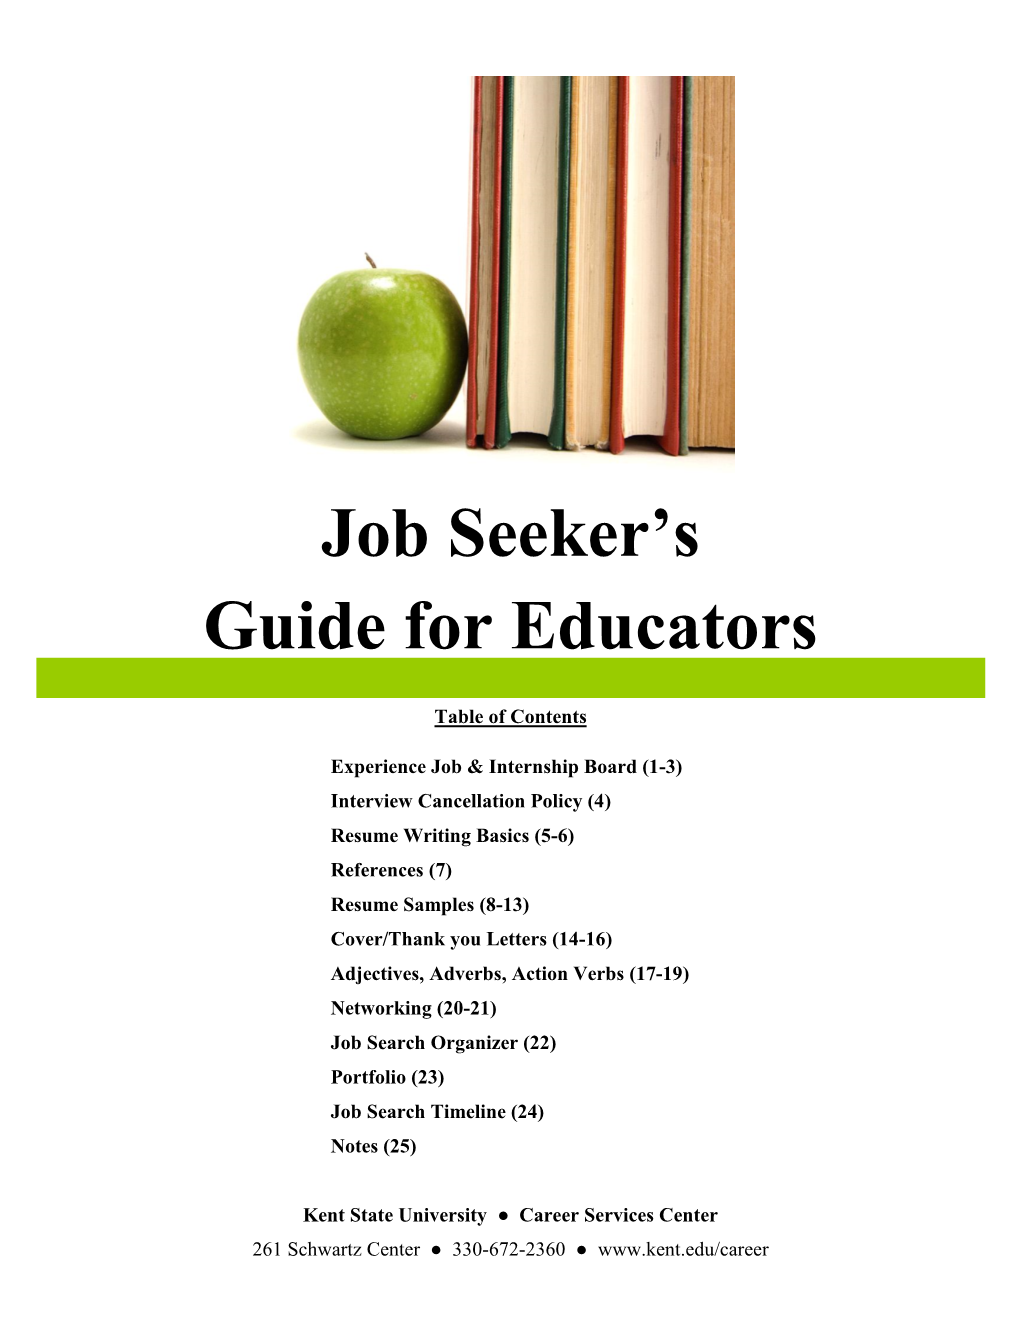 Job Seeker's Guide for Educators